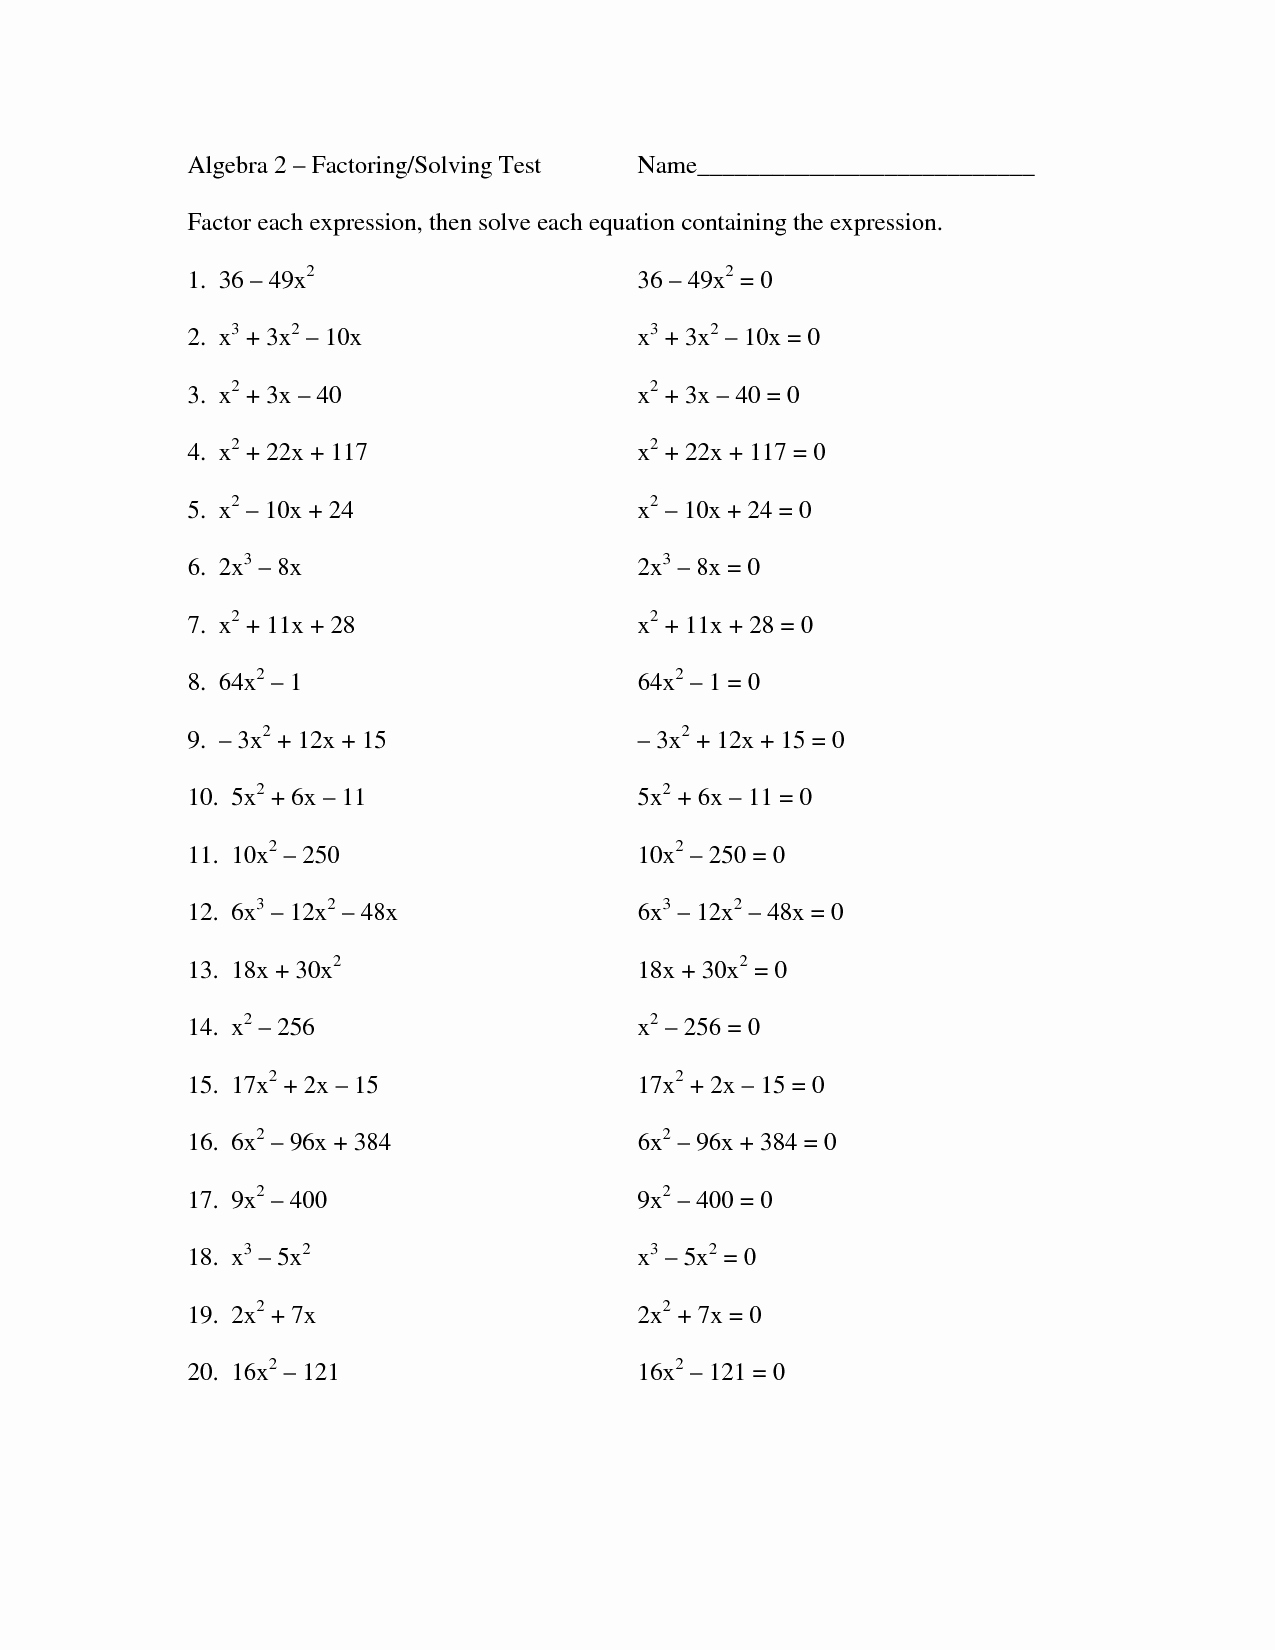 Factoring Trinomials Worksheet Algebra 2 Awesome 11 Best Of Factoring Worksheets Algebra Ii